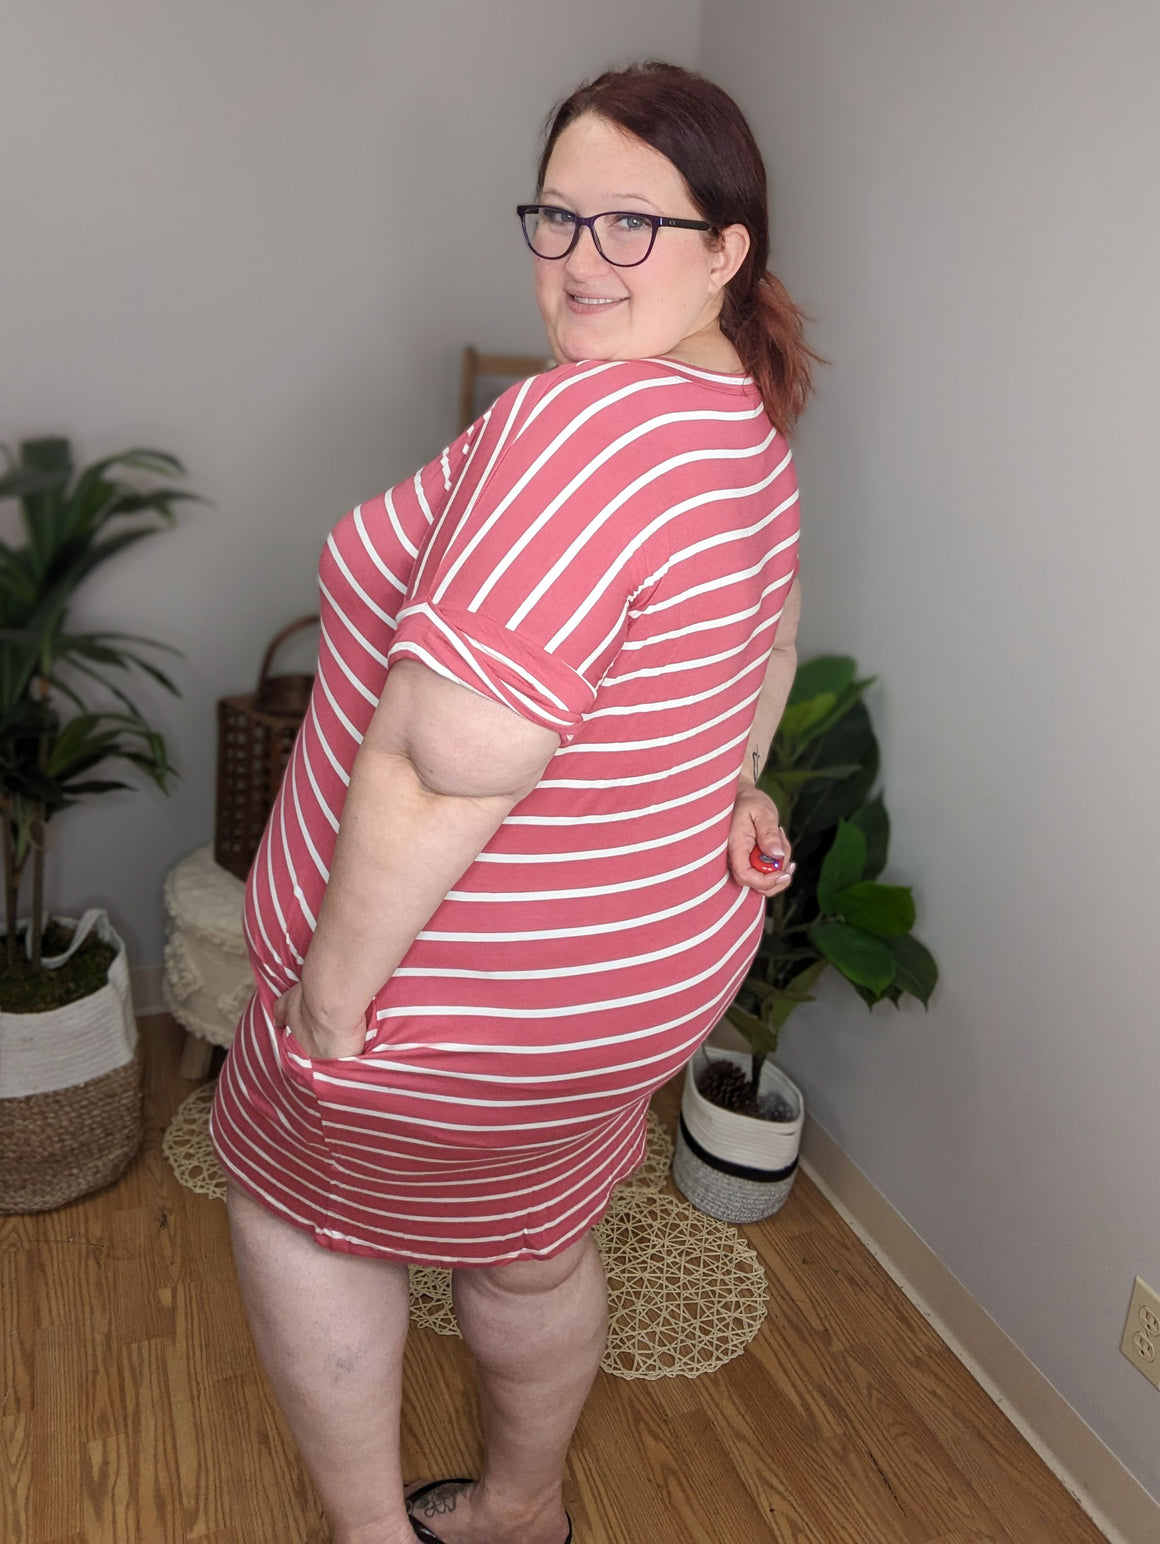 SALE- Victoria Striped Tshirt Dress w/Cuff Sleeve